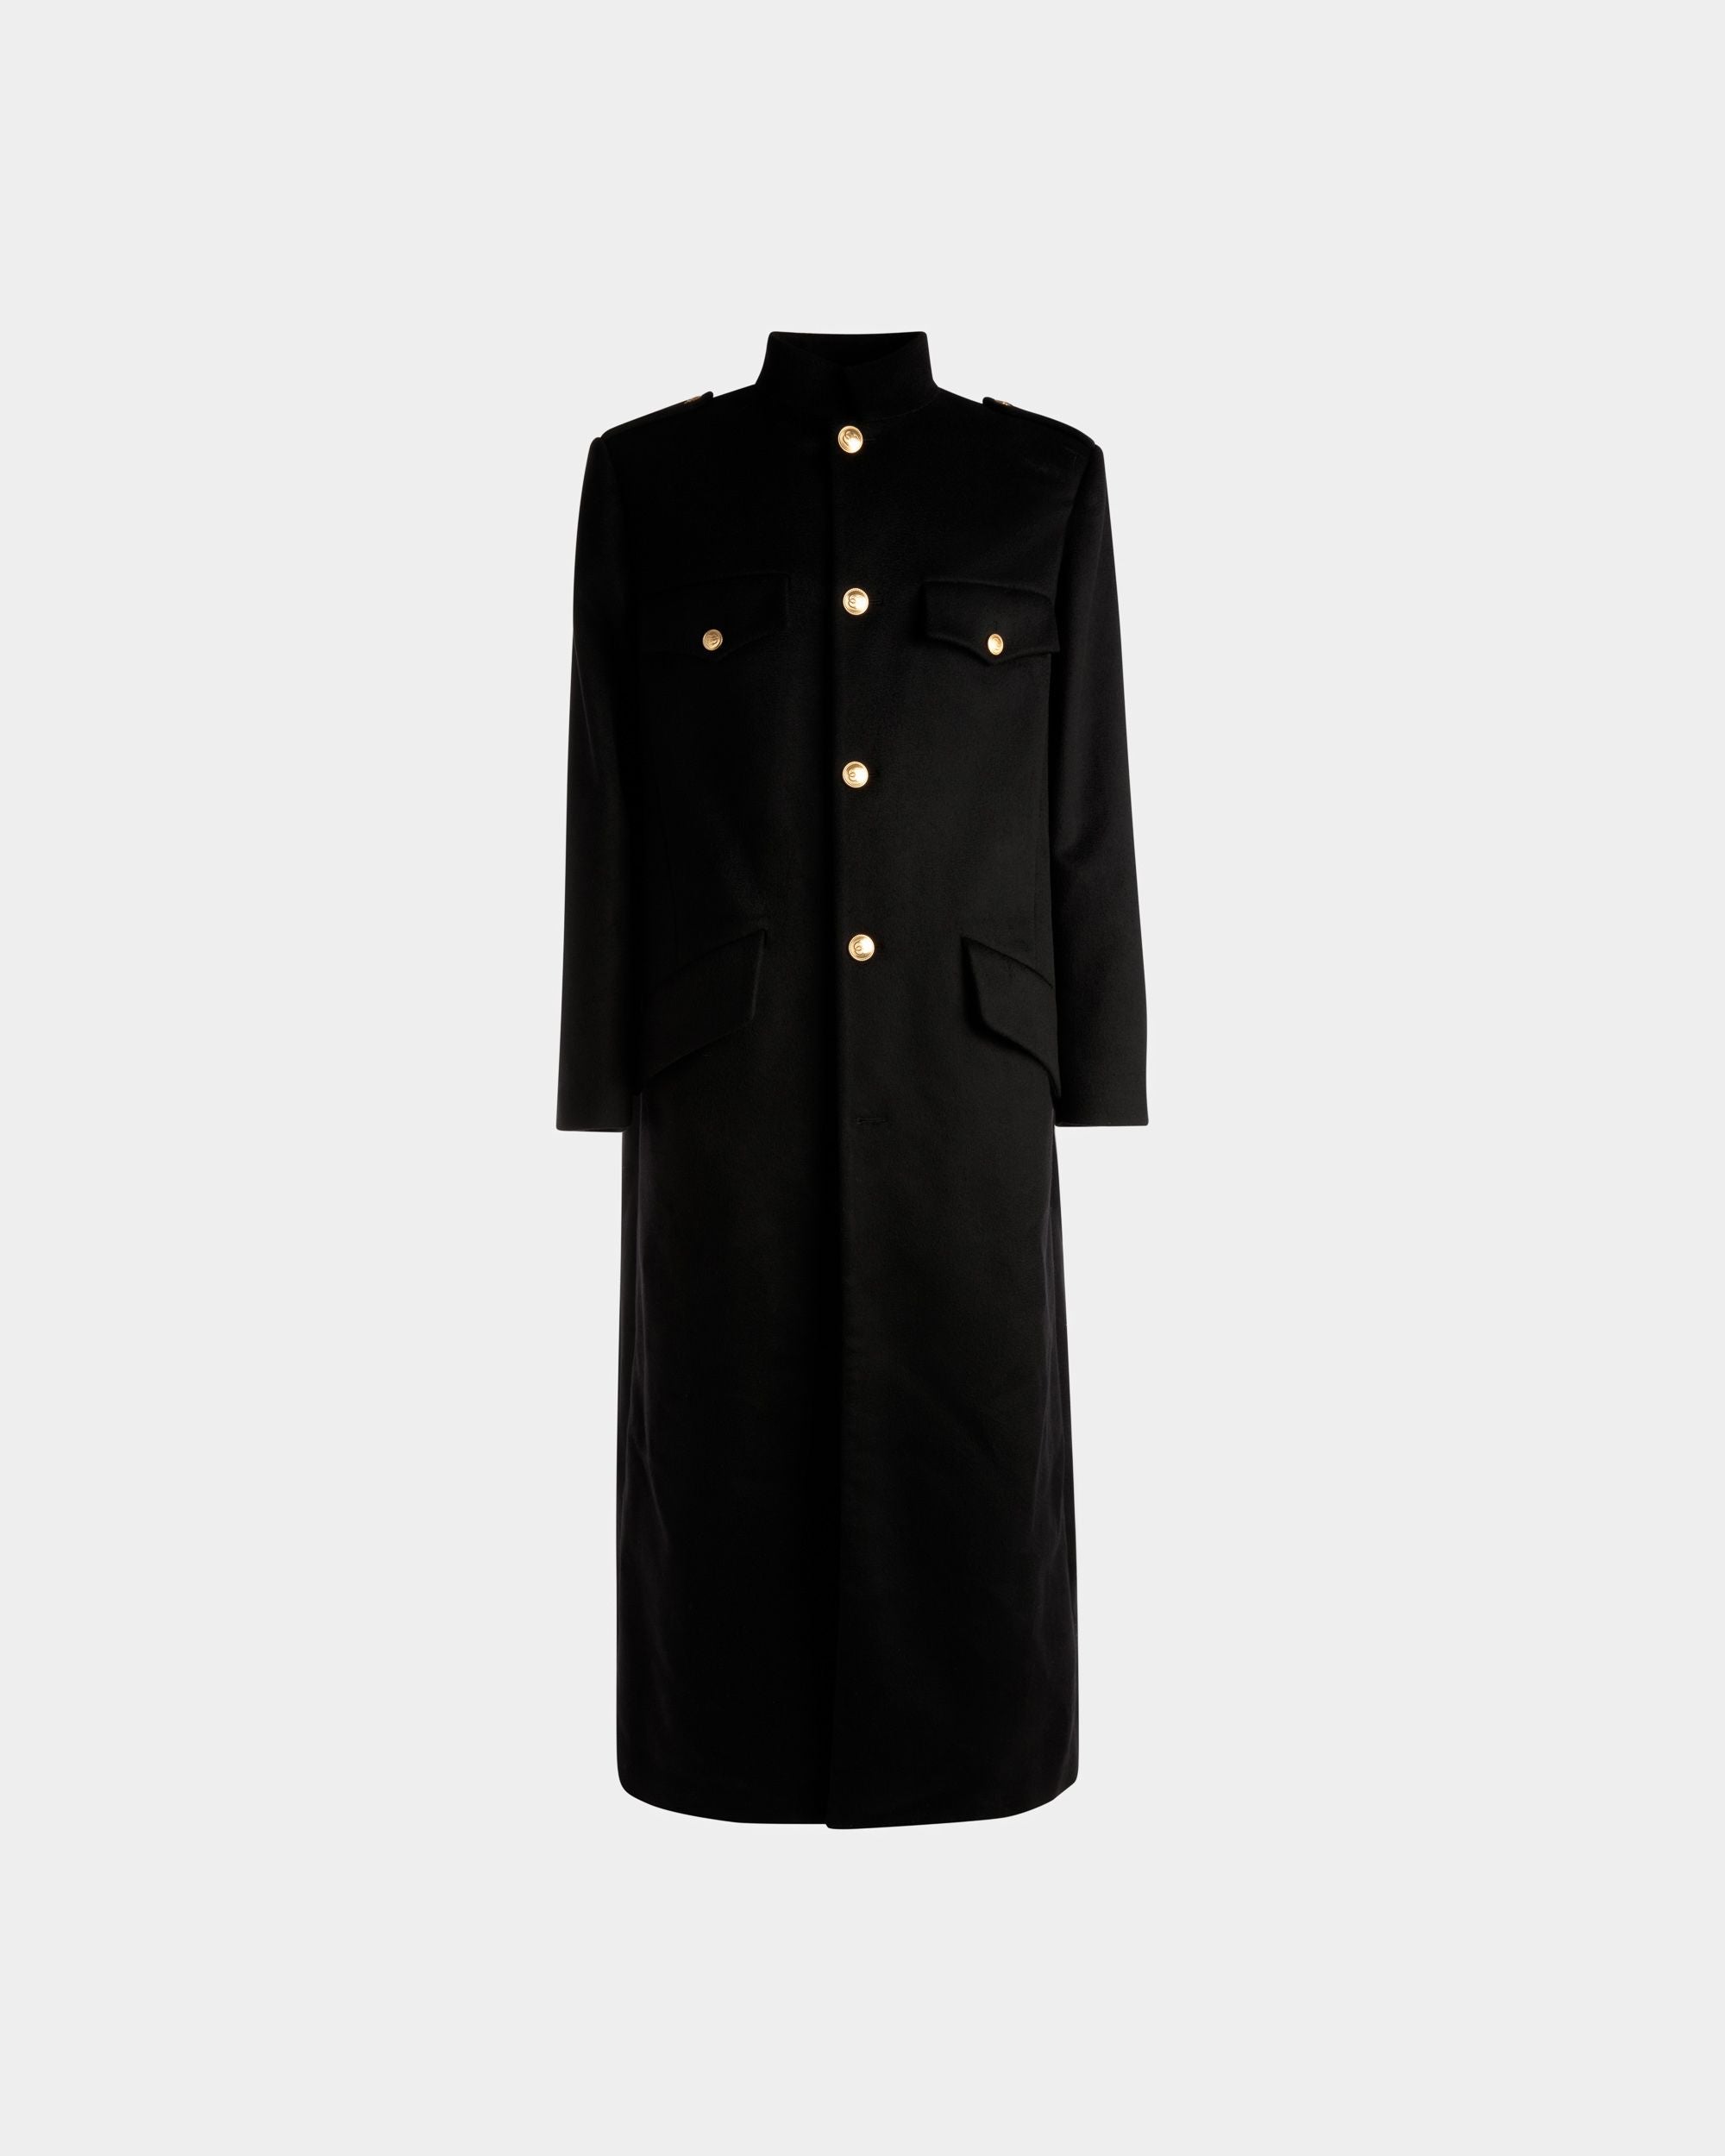 Long Utility Coat | Men's Coat | Black Wool | Bally | Still Life Front